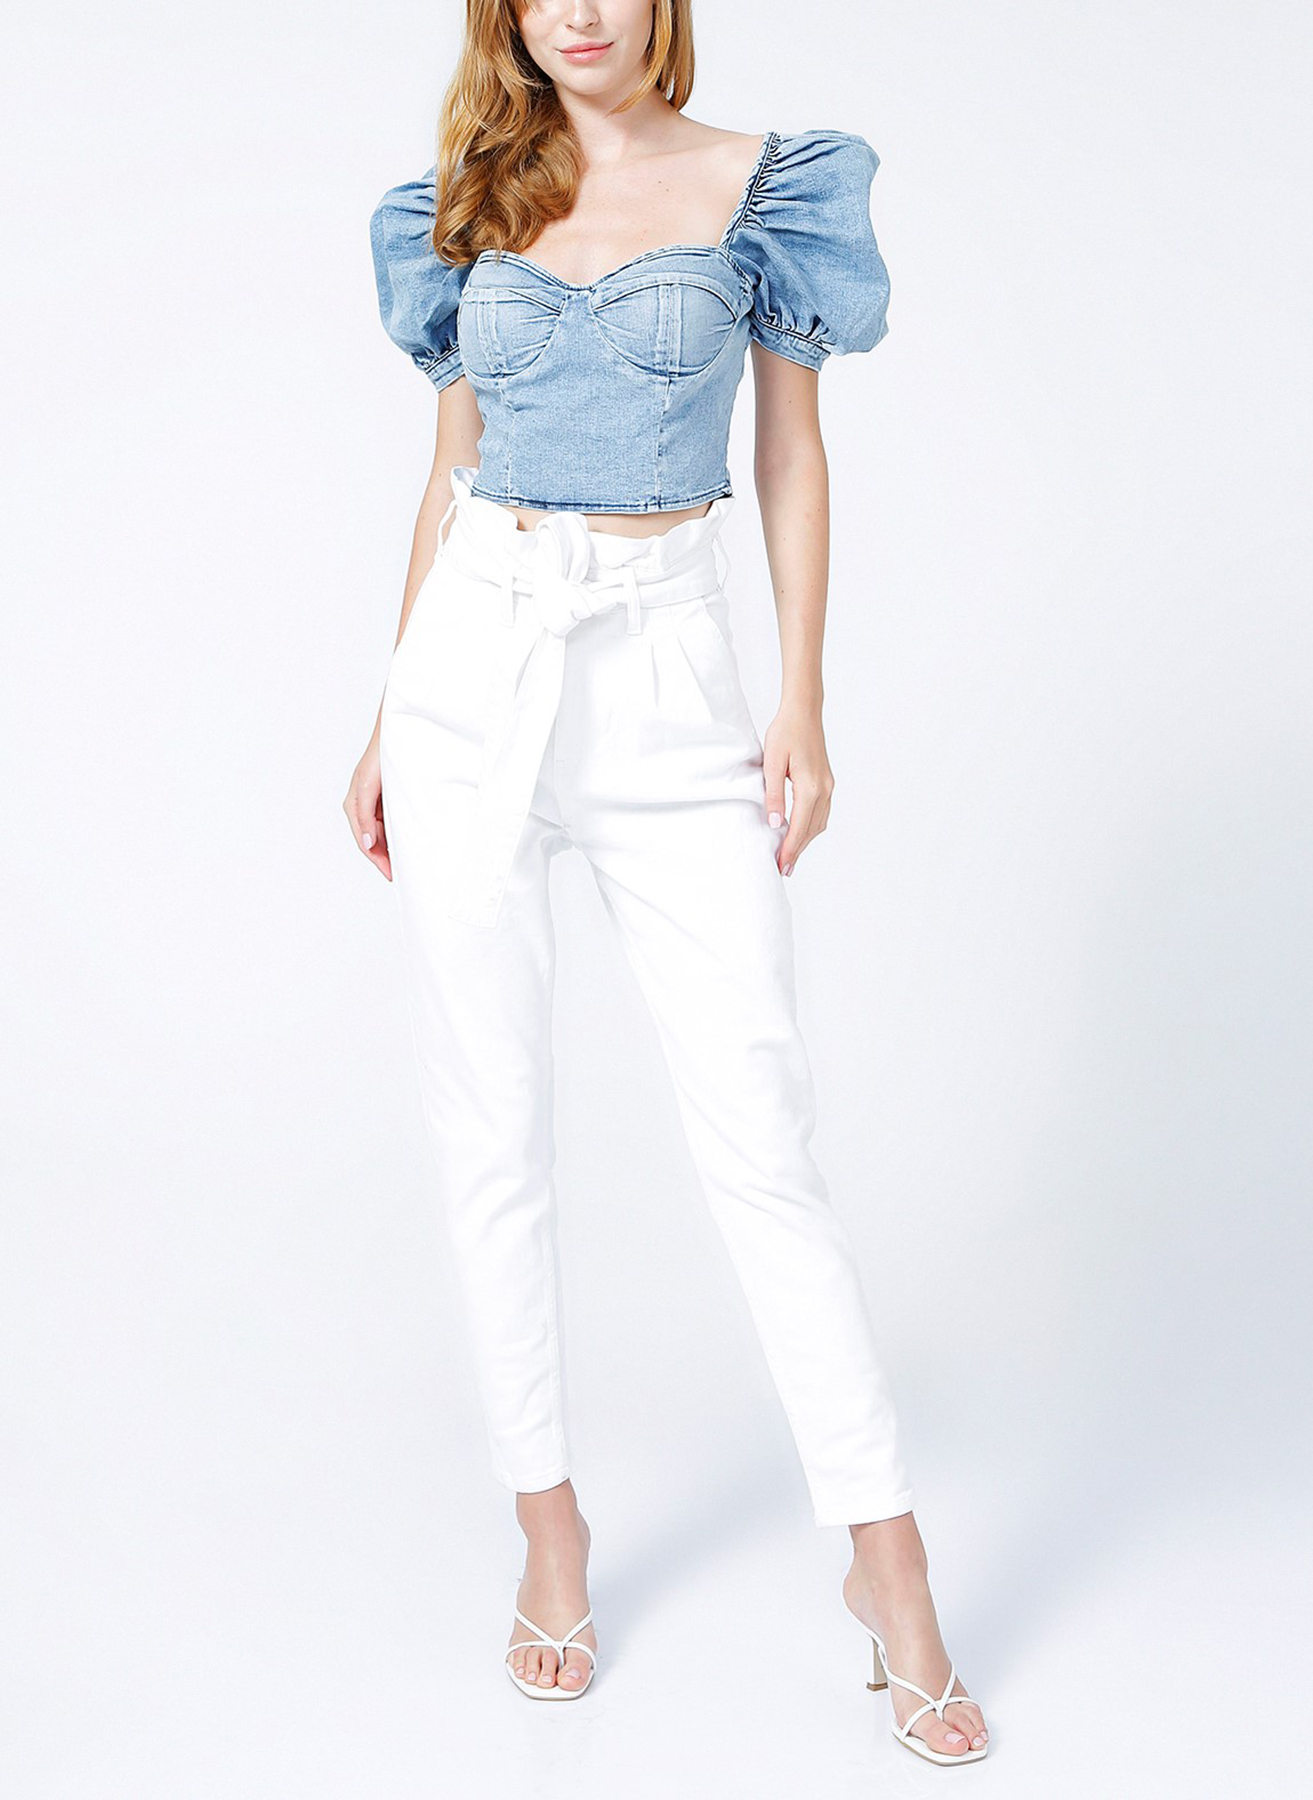 RG-202 High waist ruffled detailed white jeans